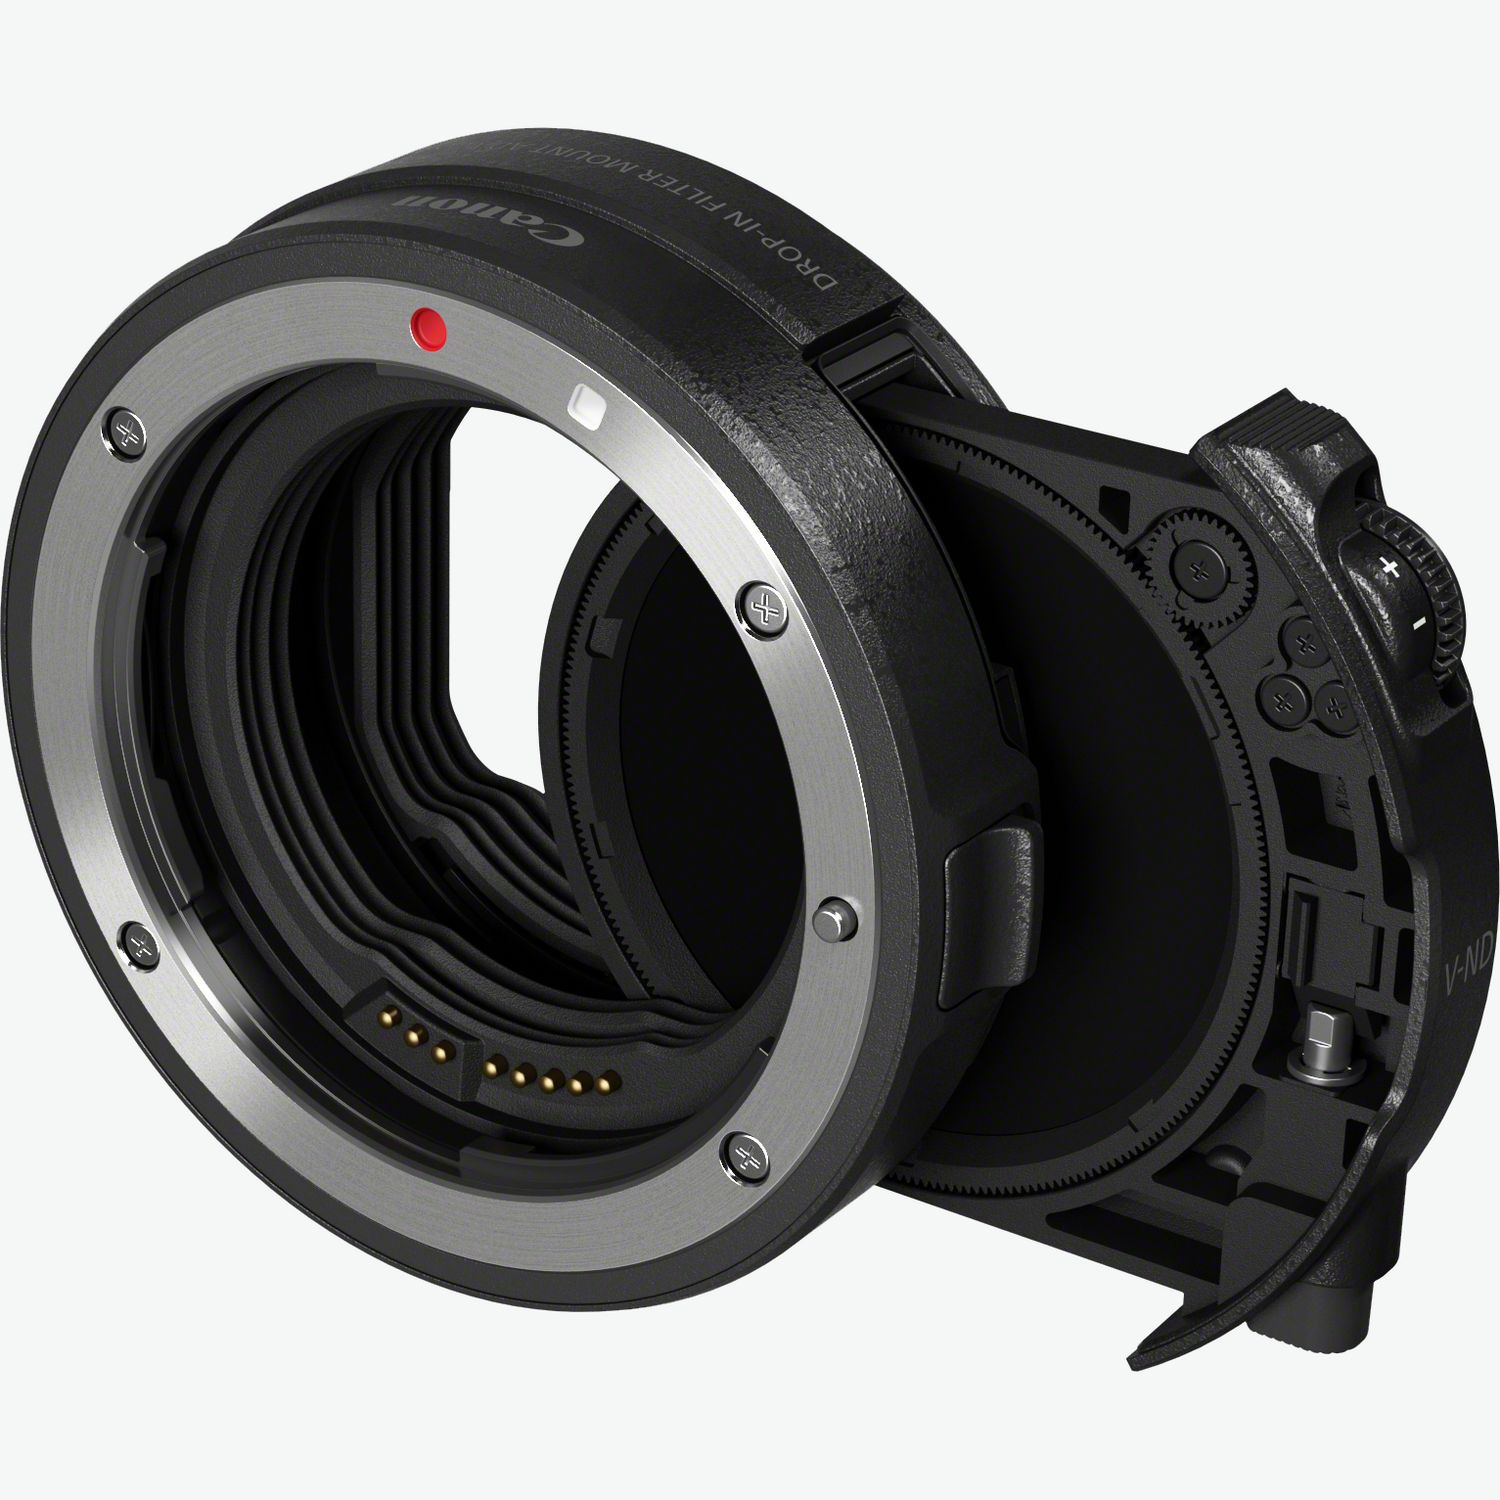 Comprar Objetivo Canon RF 24-105mm f/4L IS USM al mejor precio - Provideo